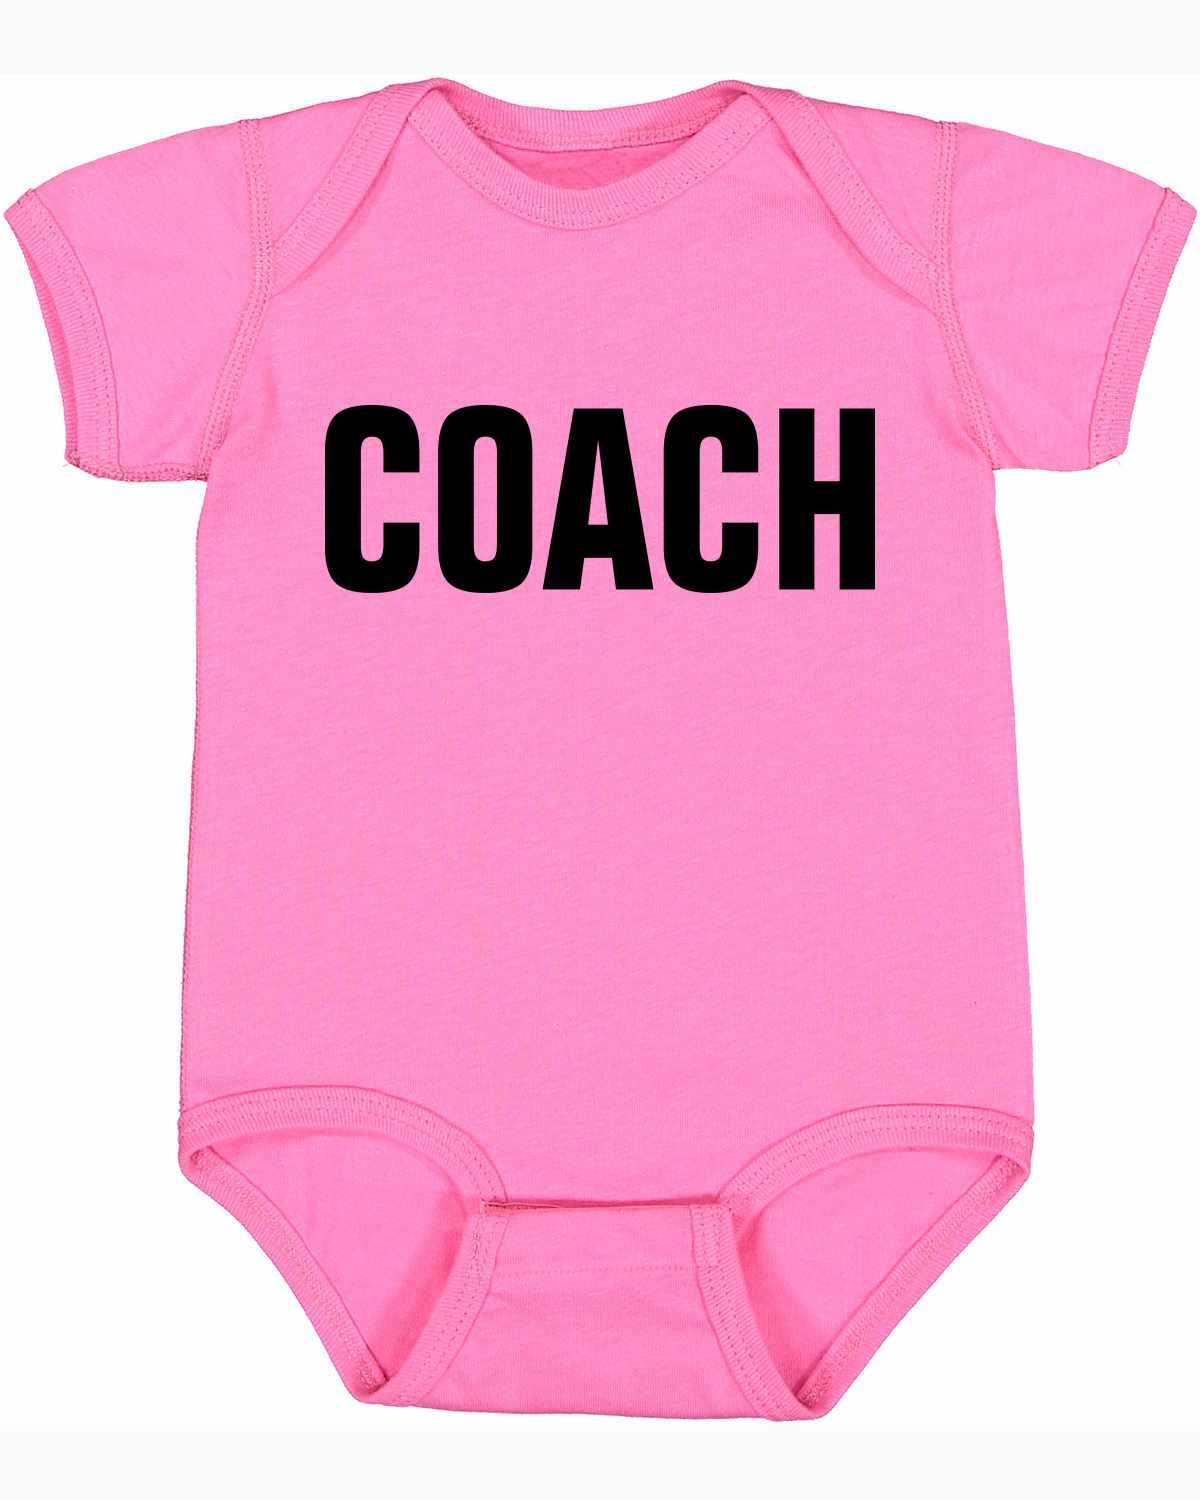 COACH on Infant BodySuit (#406-10)